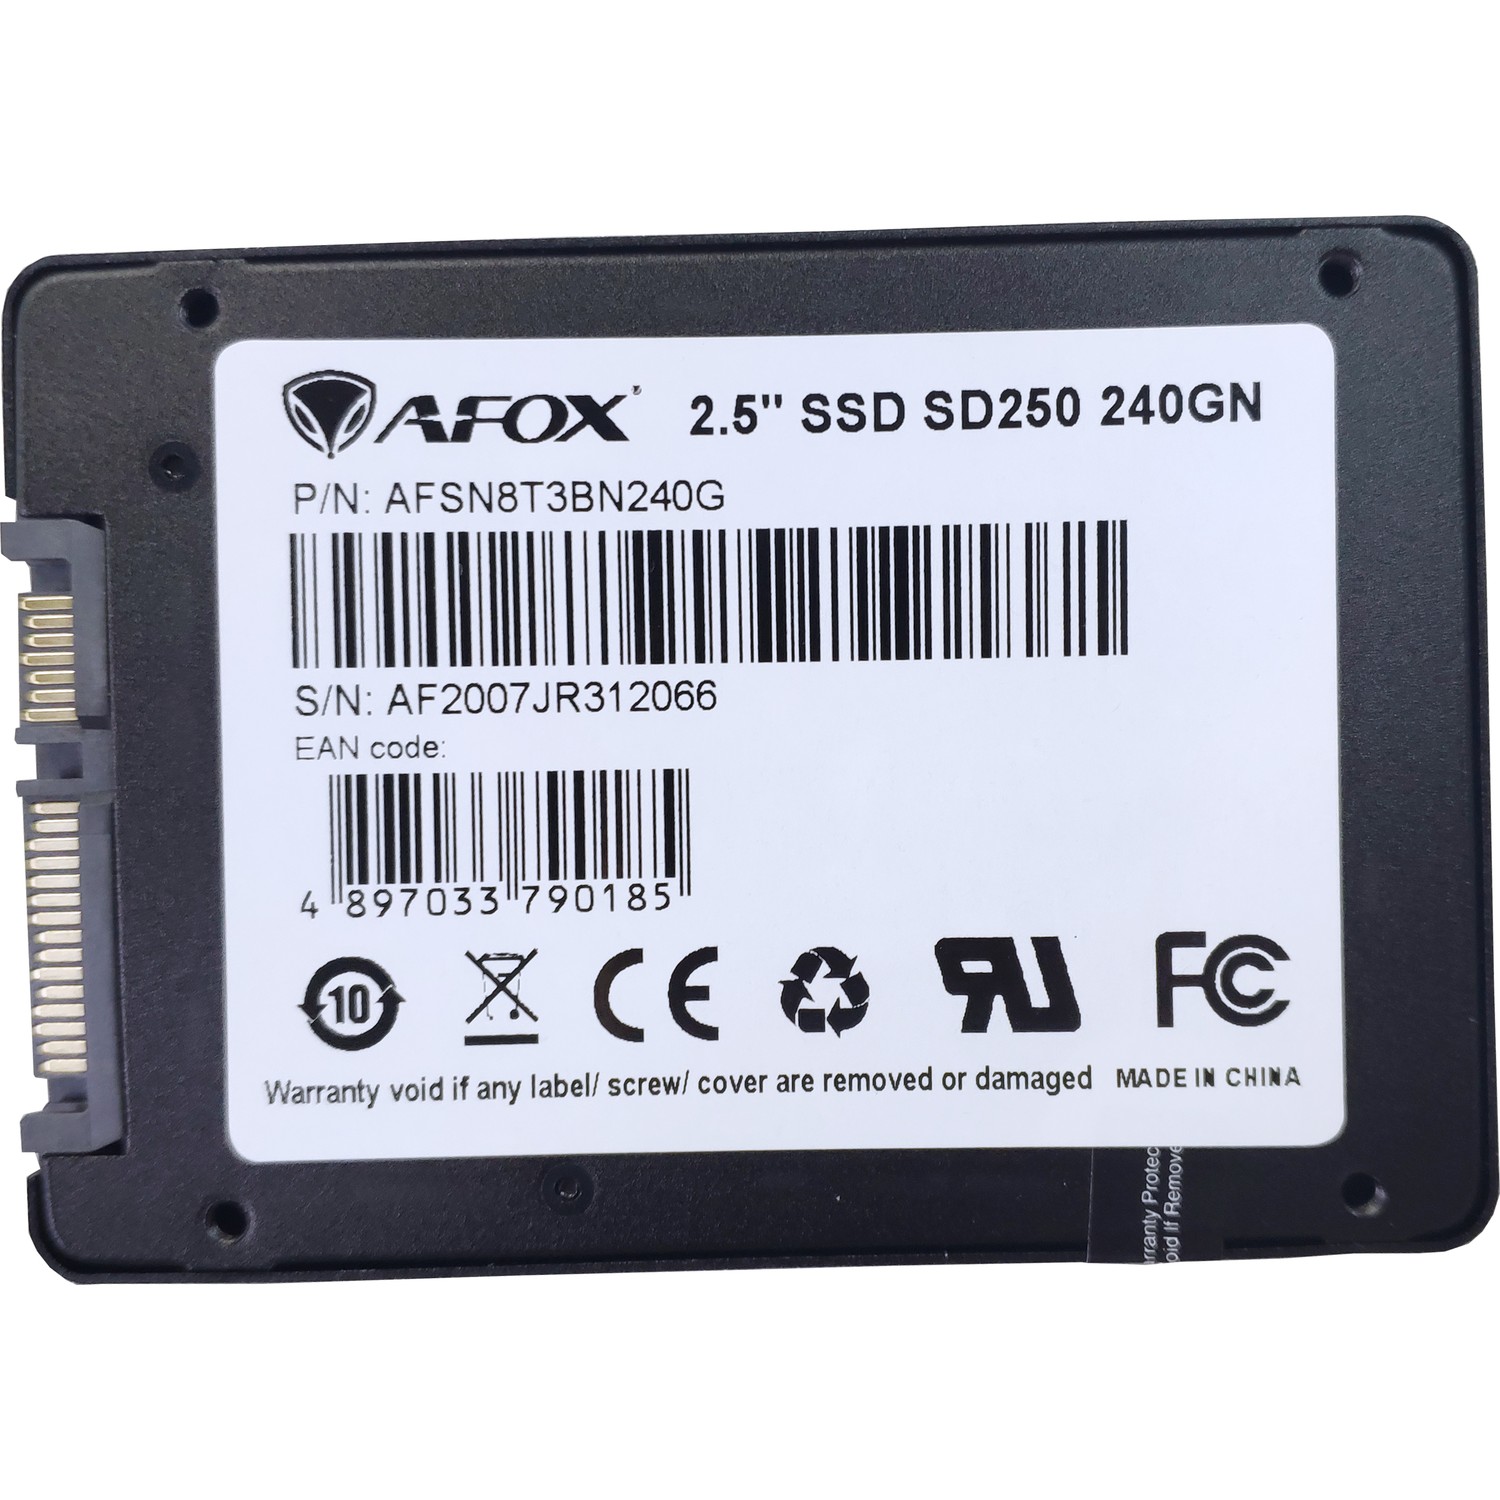 lost heart essence Go back Afox 2.5" 240GB 560-500MB/s SATA3 SSD SD250-240GN Fiyatı